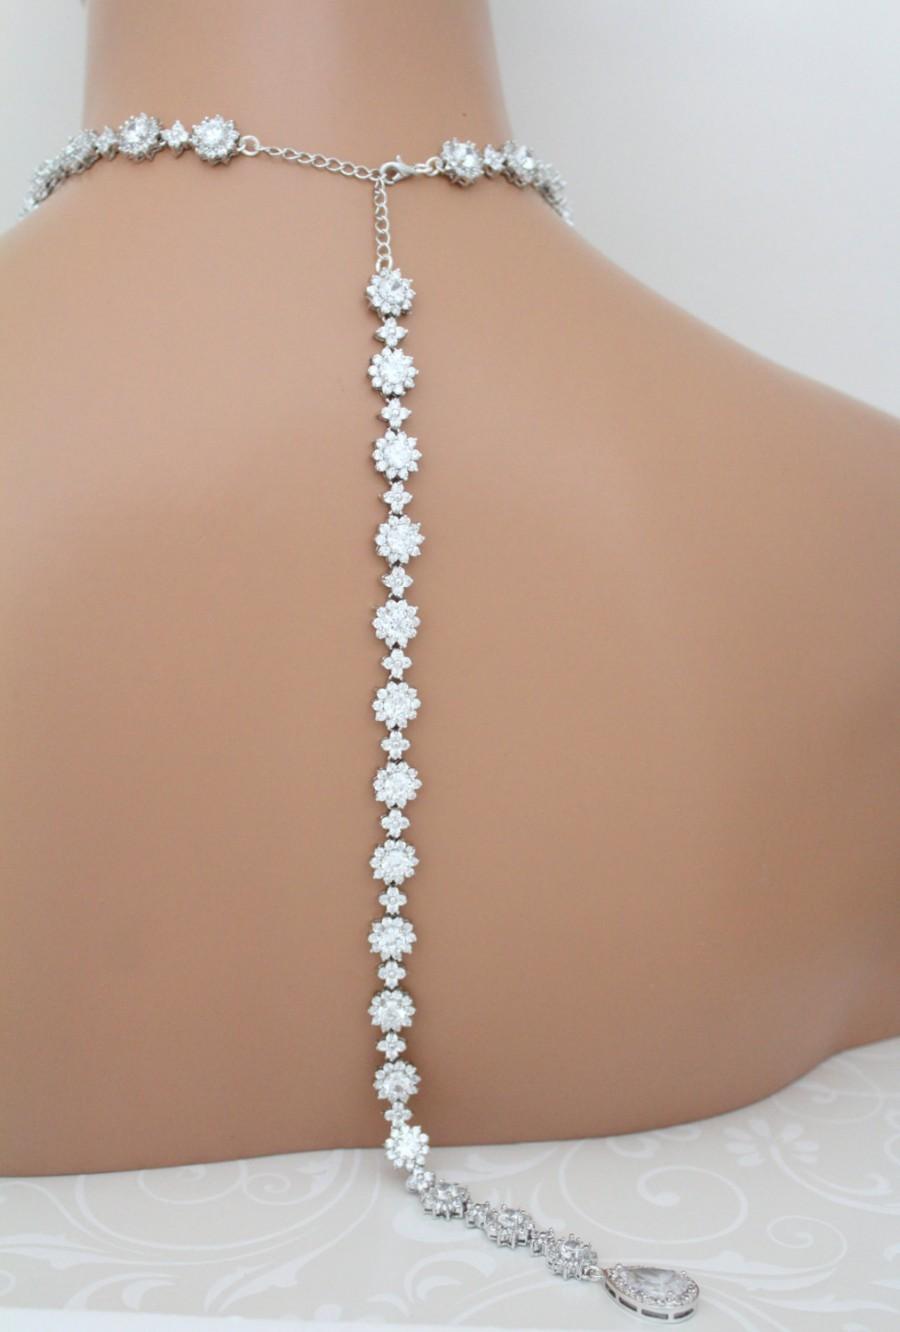 زفاف - Bridal Backdrop necklace, Crystal Wedding necklace, Long Backdrop necklace, Statement necklace, Rhinestone necklace, CZ necklace, Halo